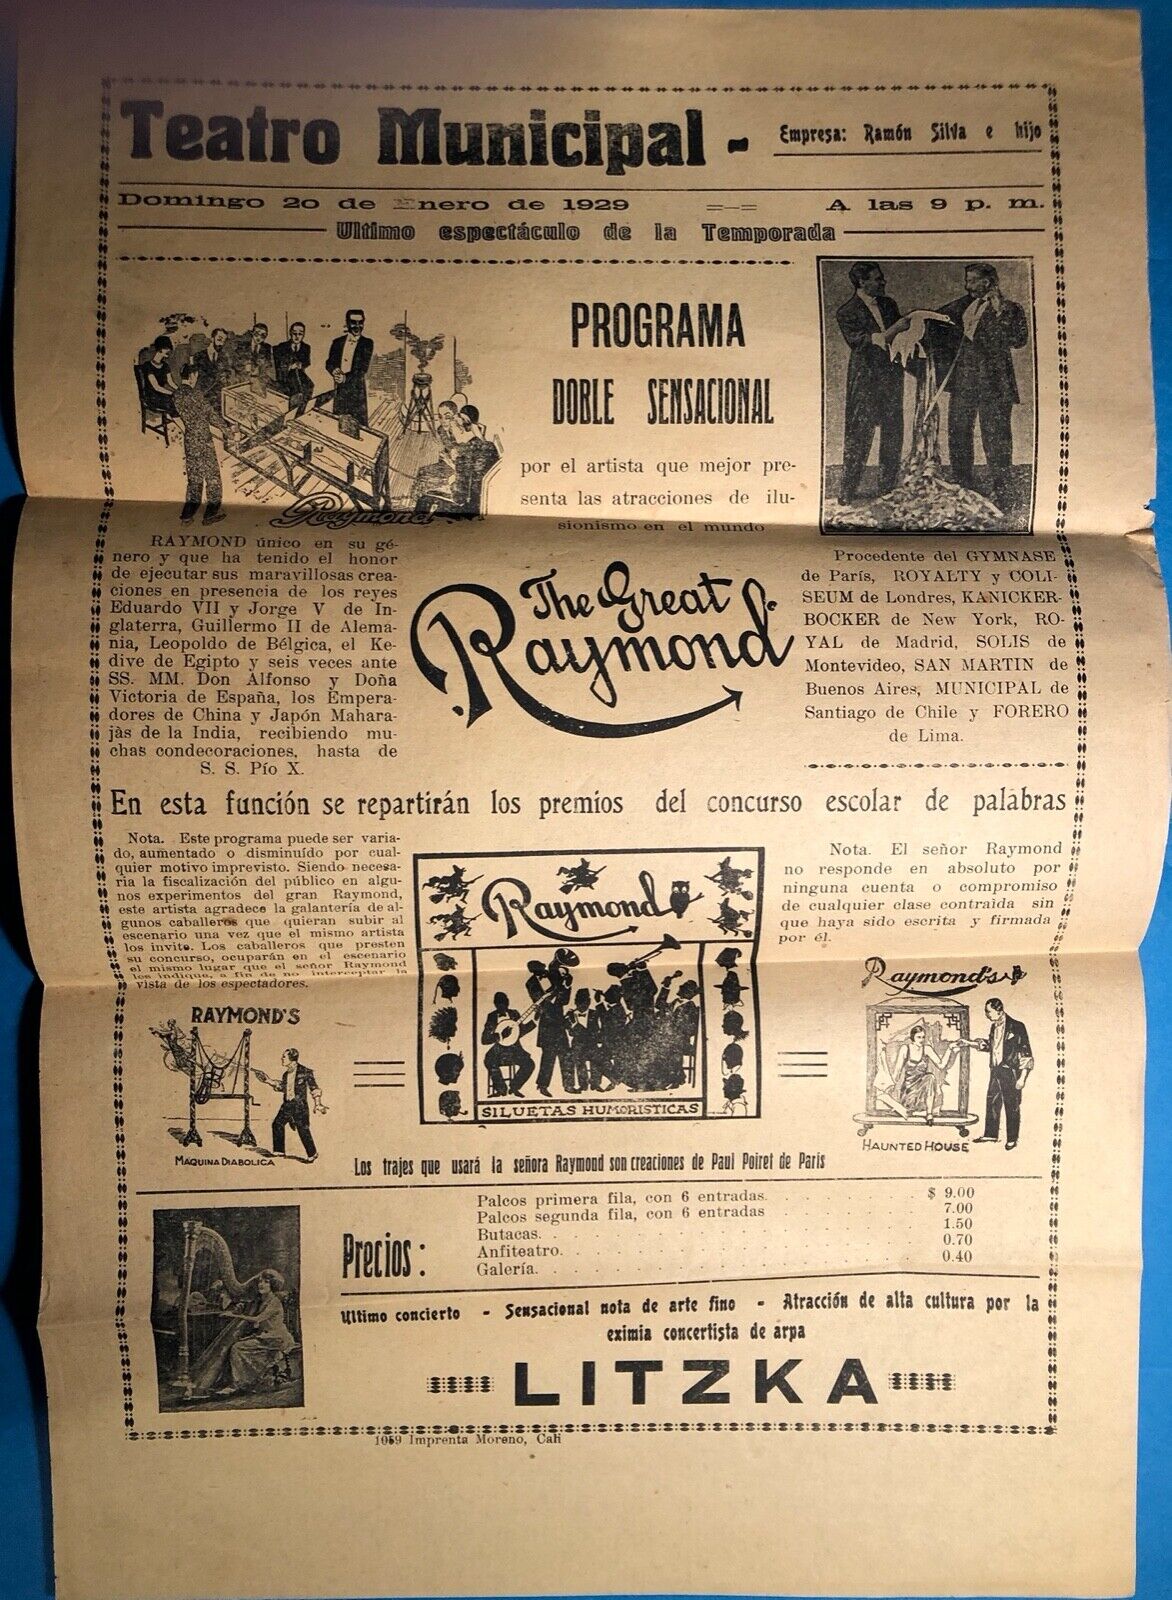 THE GREAT RAYMOND AND LITZKA. 1929 COLOMBIAN BROADSIDE IN SPANISH